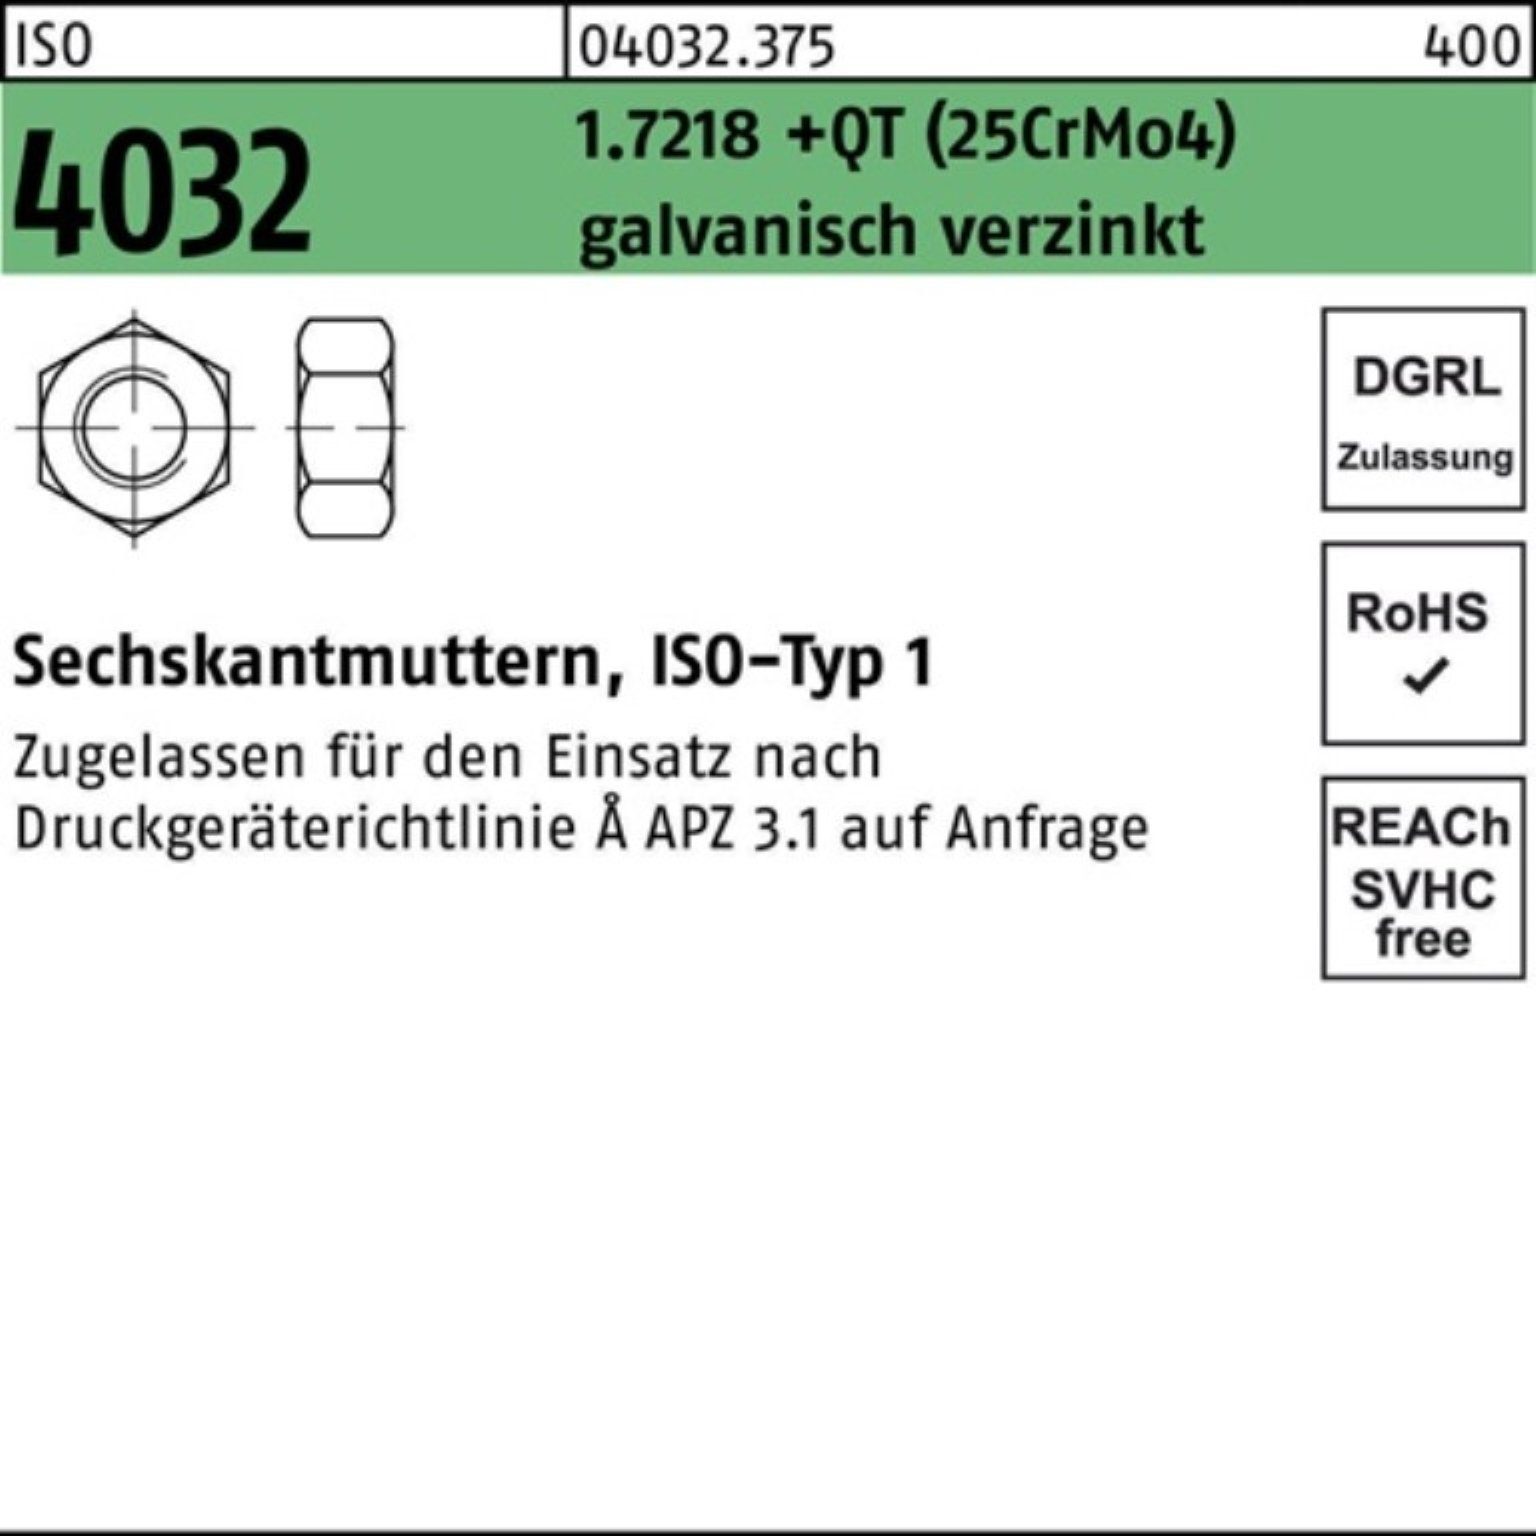 ISO Sechskantmutter 100er (25CrMo4) +QT galv.verz 4032 Pack M24 1.7218 Bufab Muttern